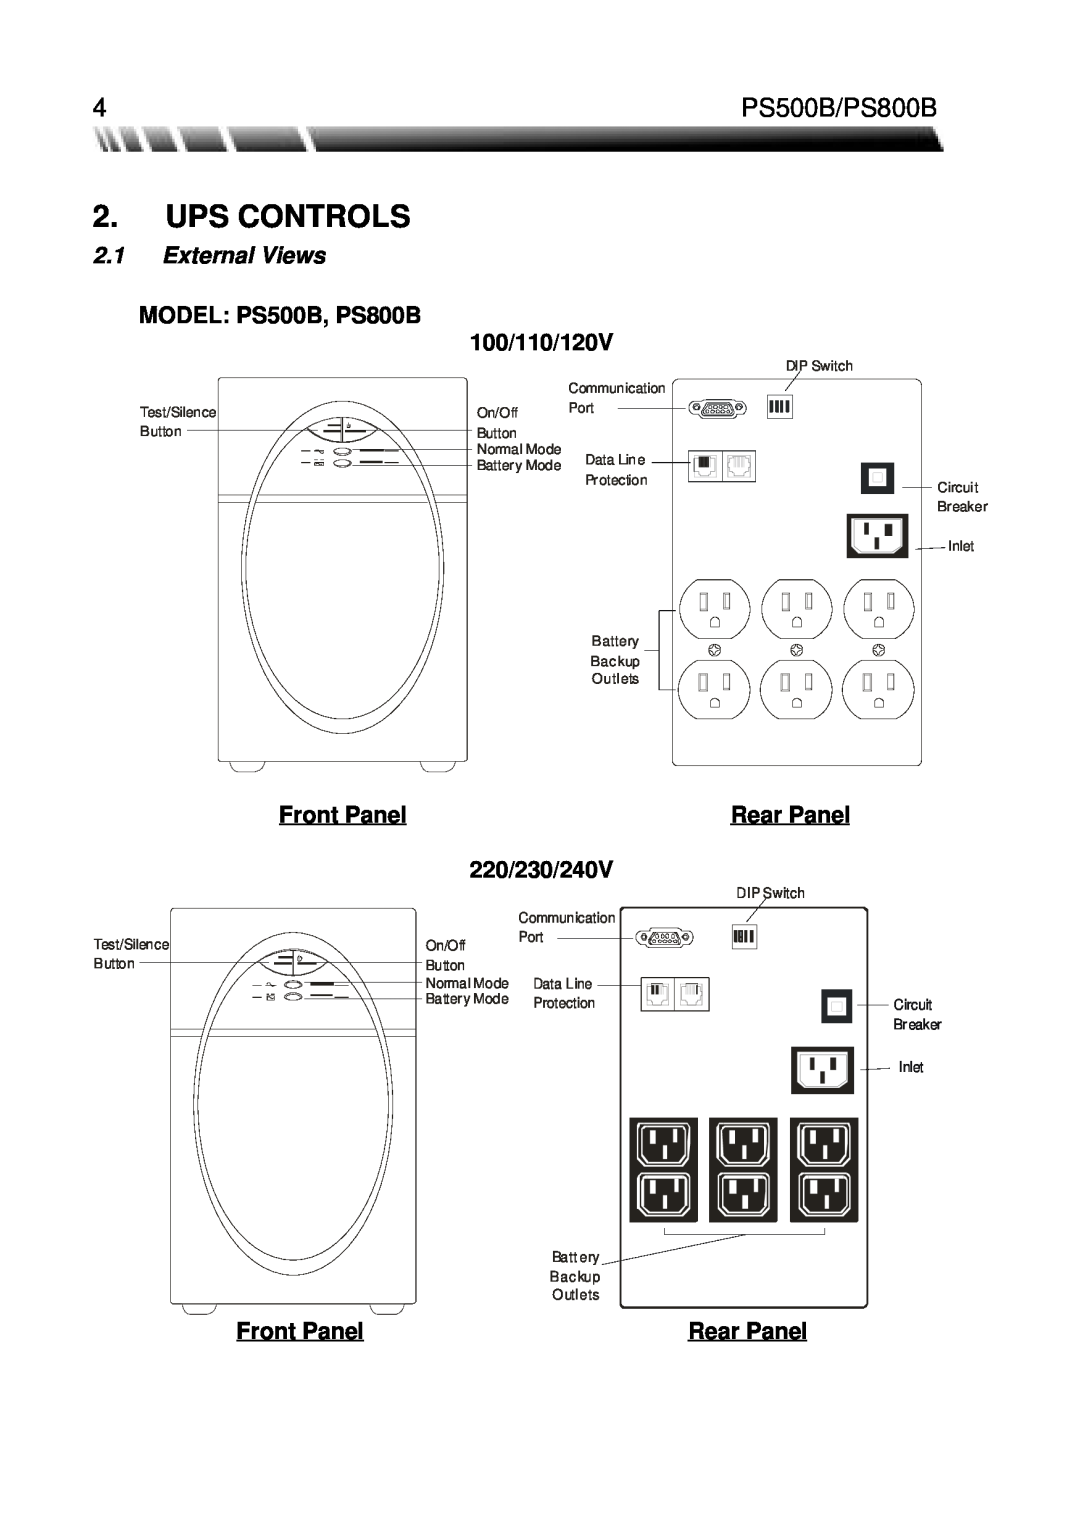 ViewSonic PS800B, PS500B manual Ups Controls, 2.1External Views, Front Panel, Rear Panel, 220/230/240V, Inlet 